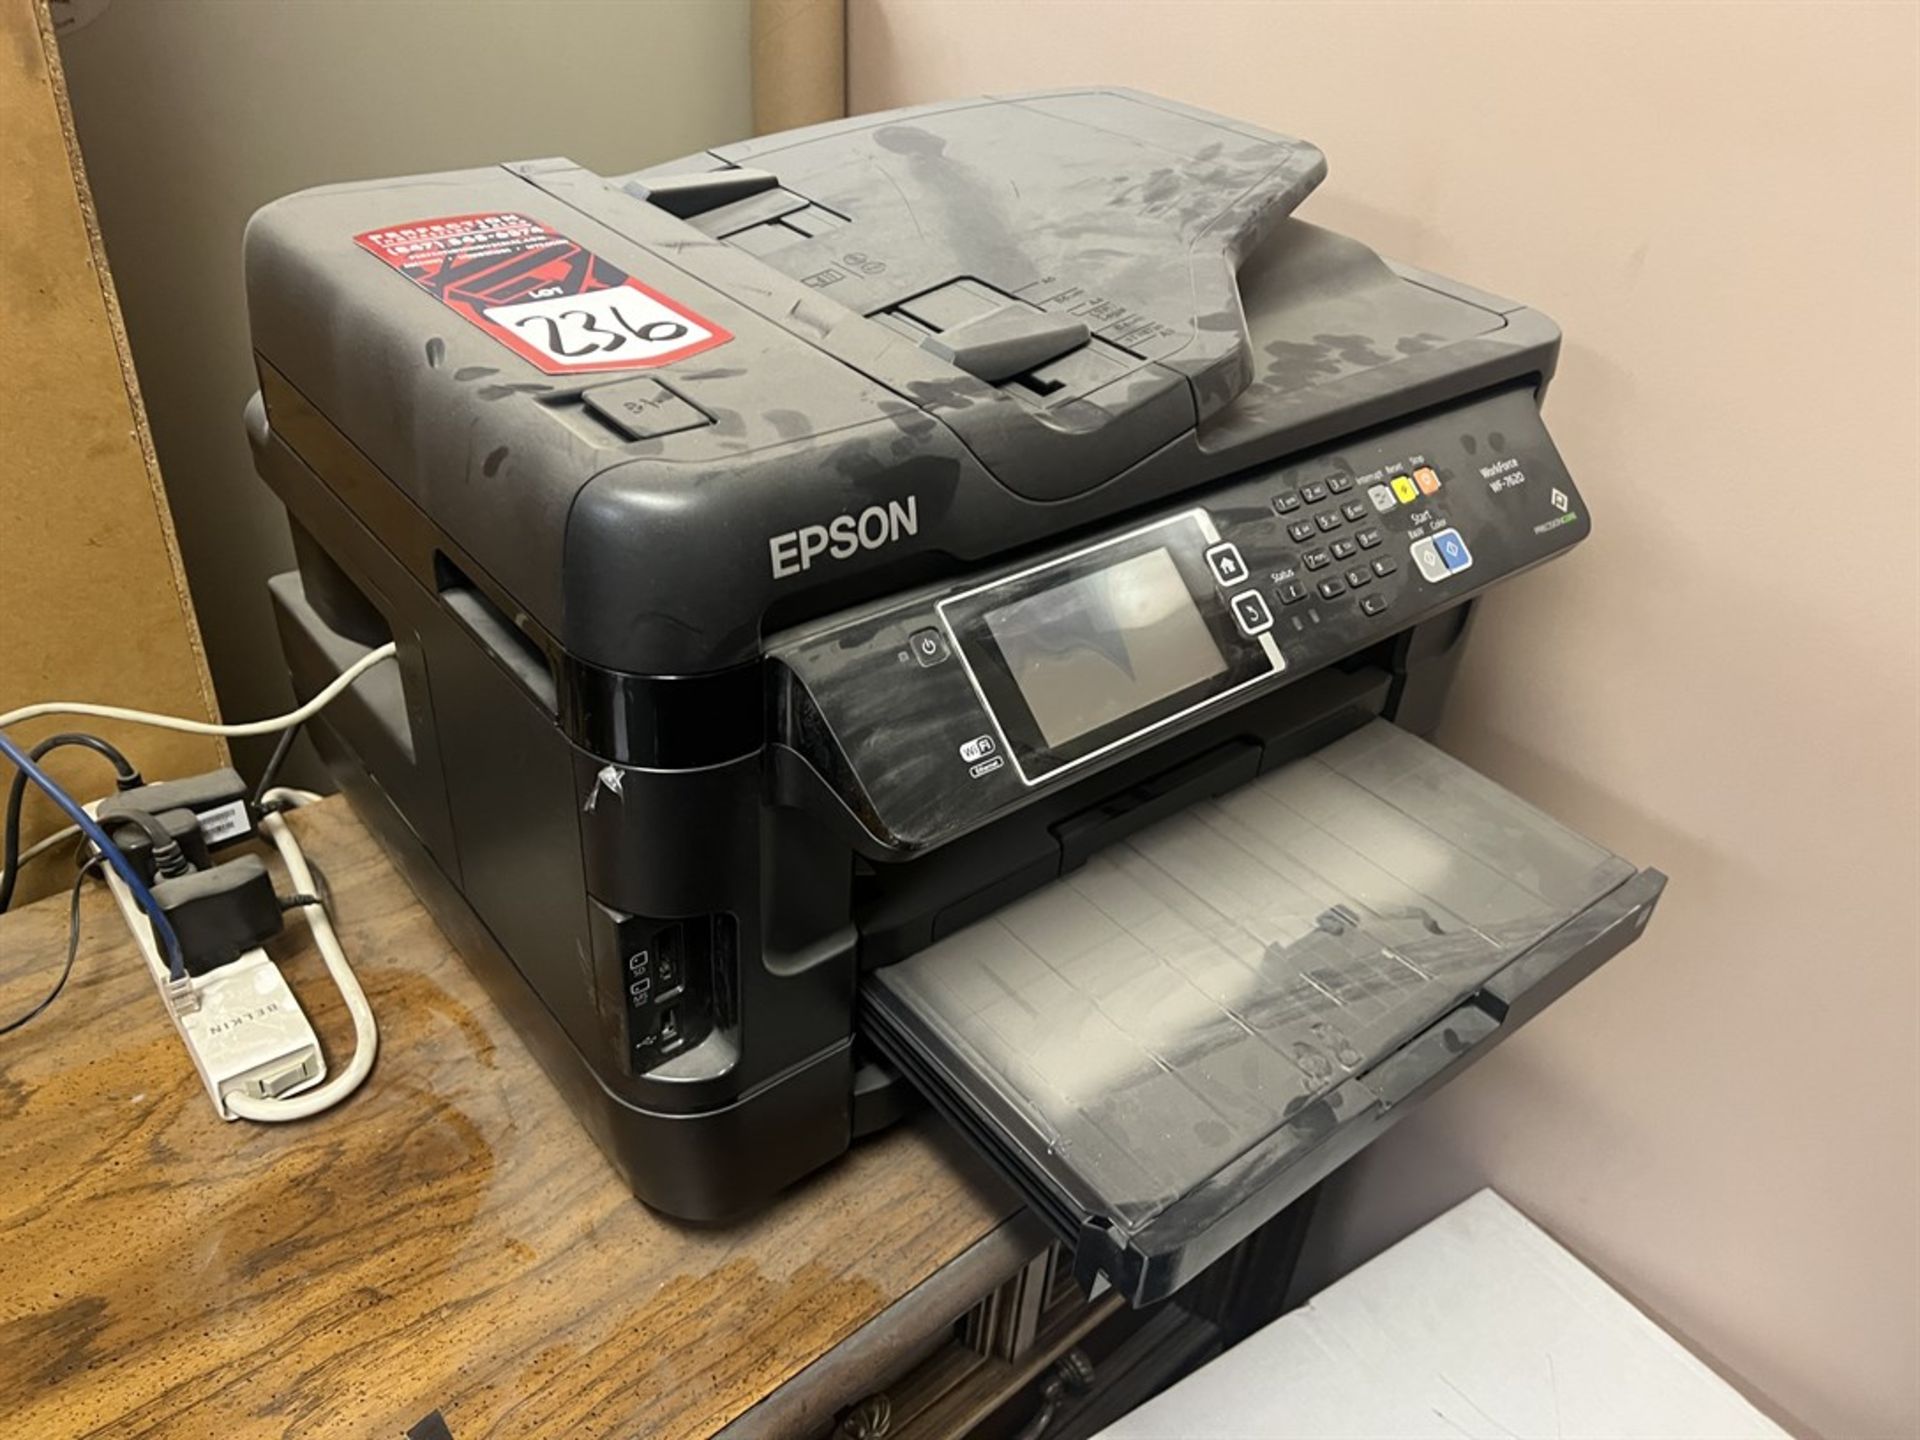 EPSON WF-7620 Workforce Printer